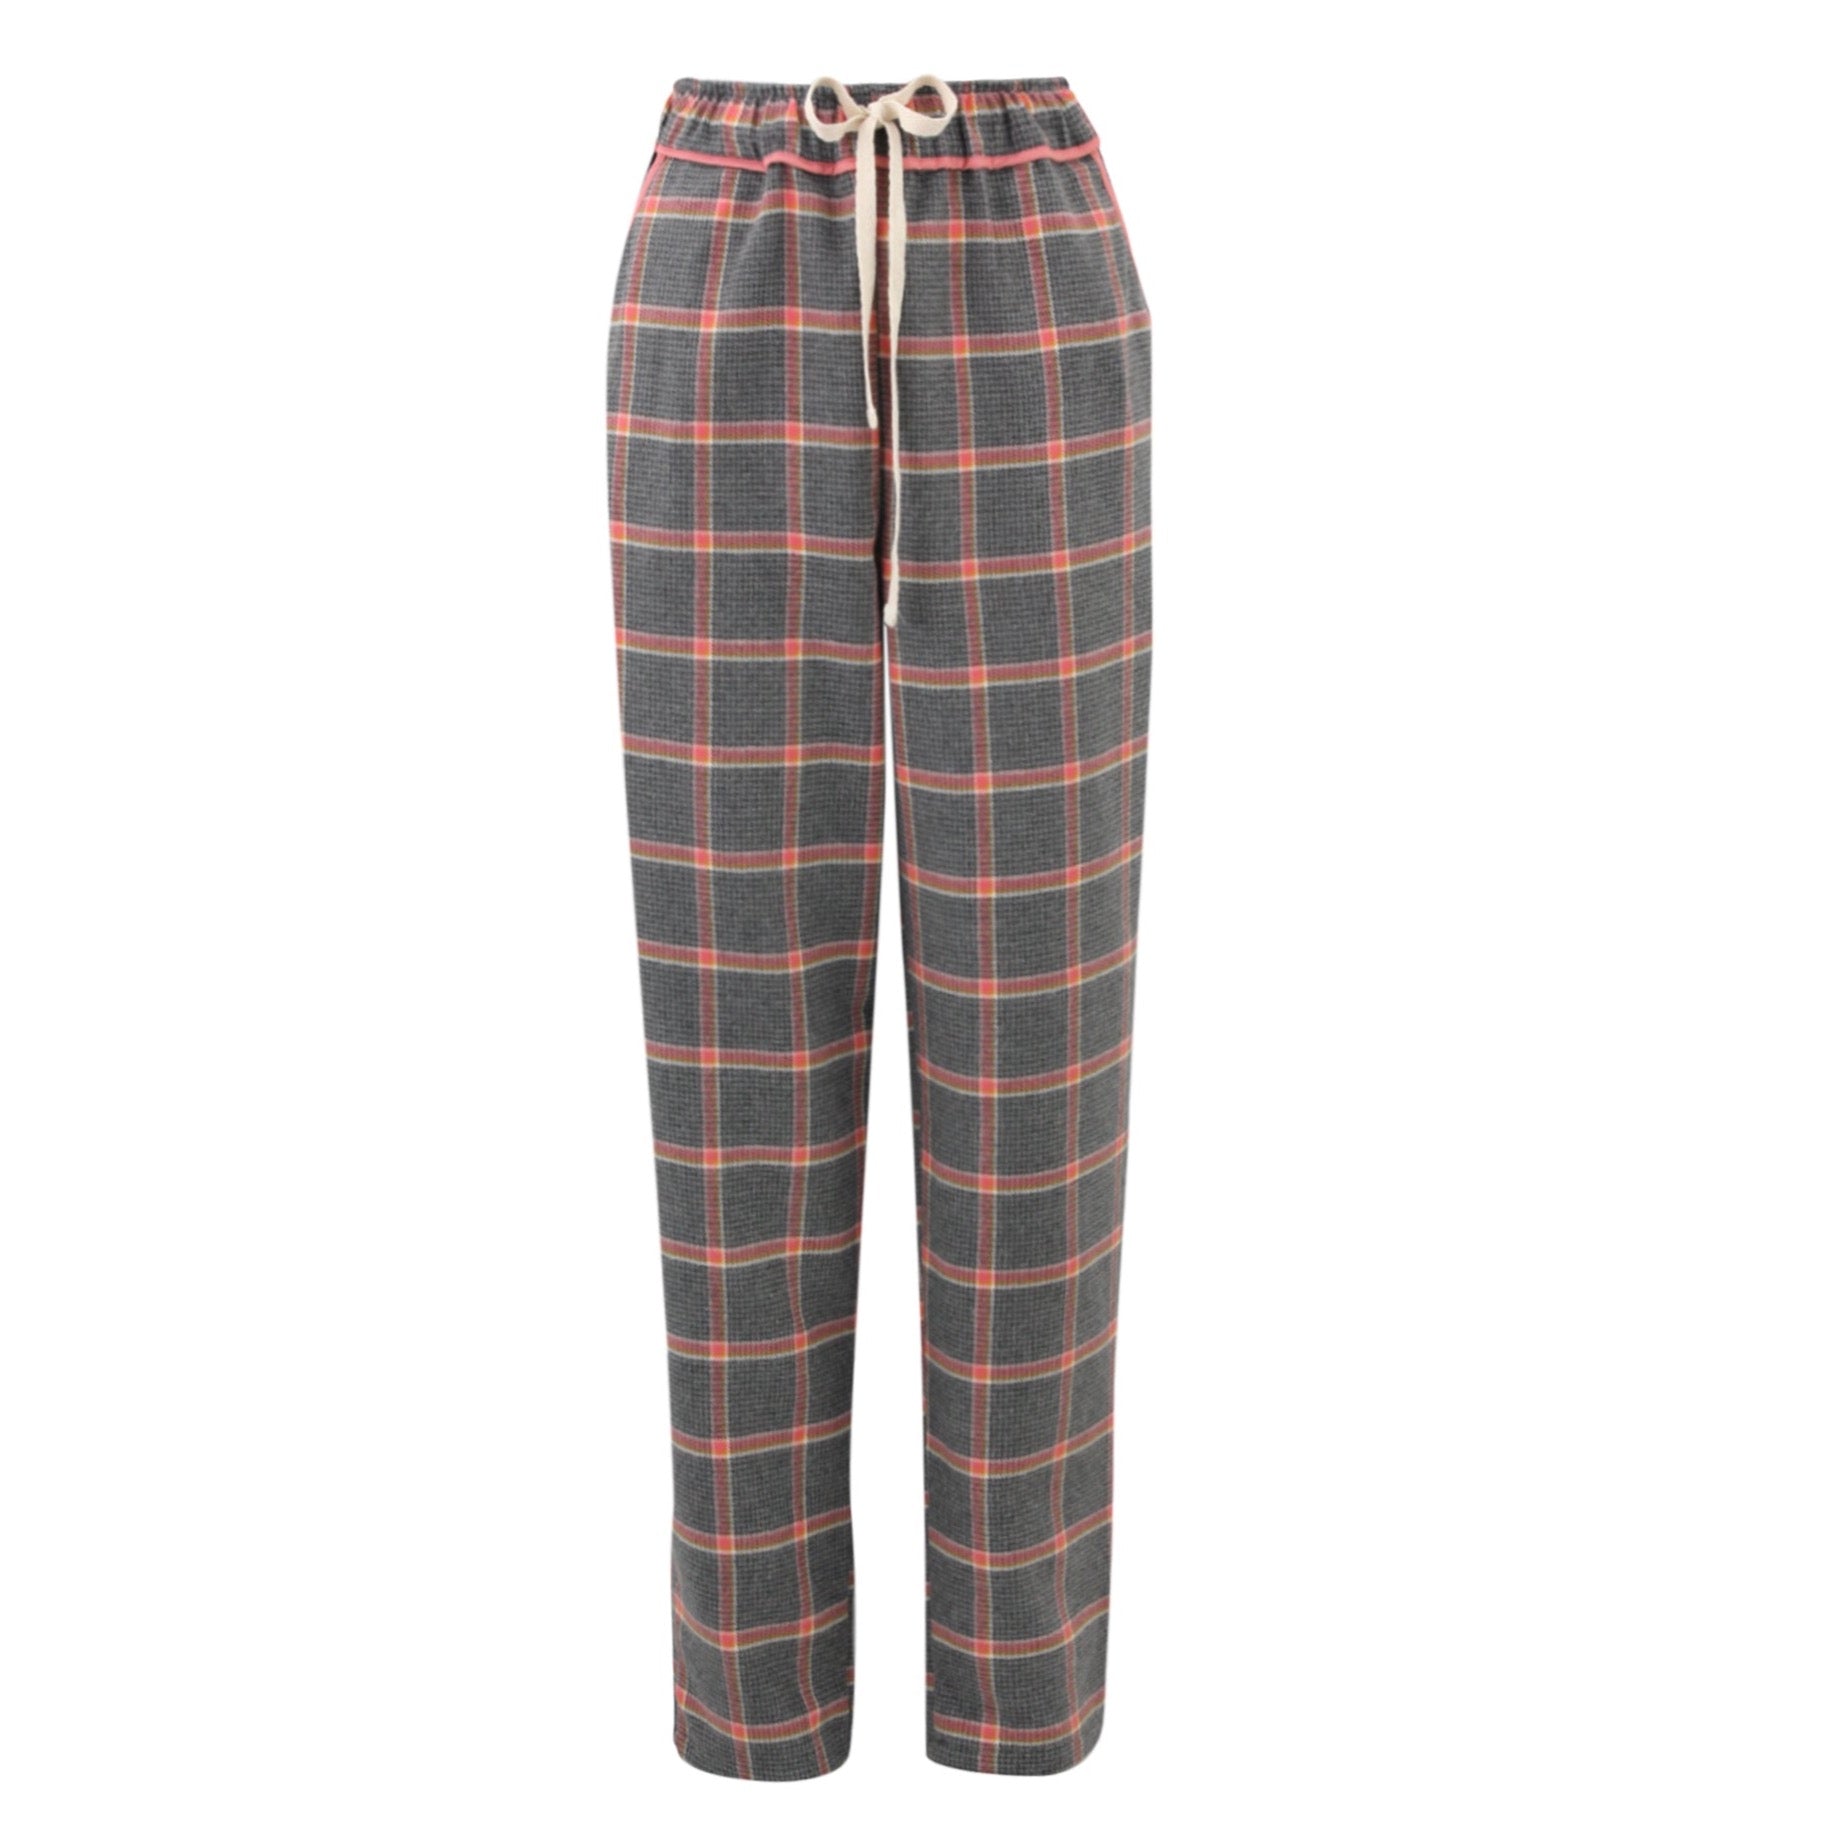 Coral/Grey Checkered Pyjama Pants